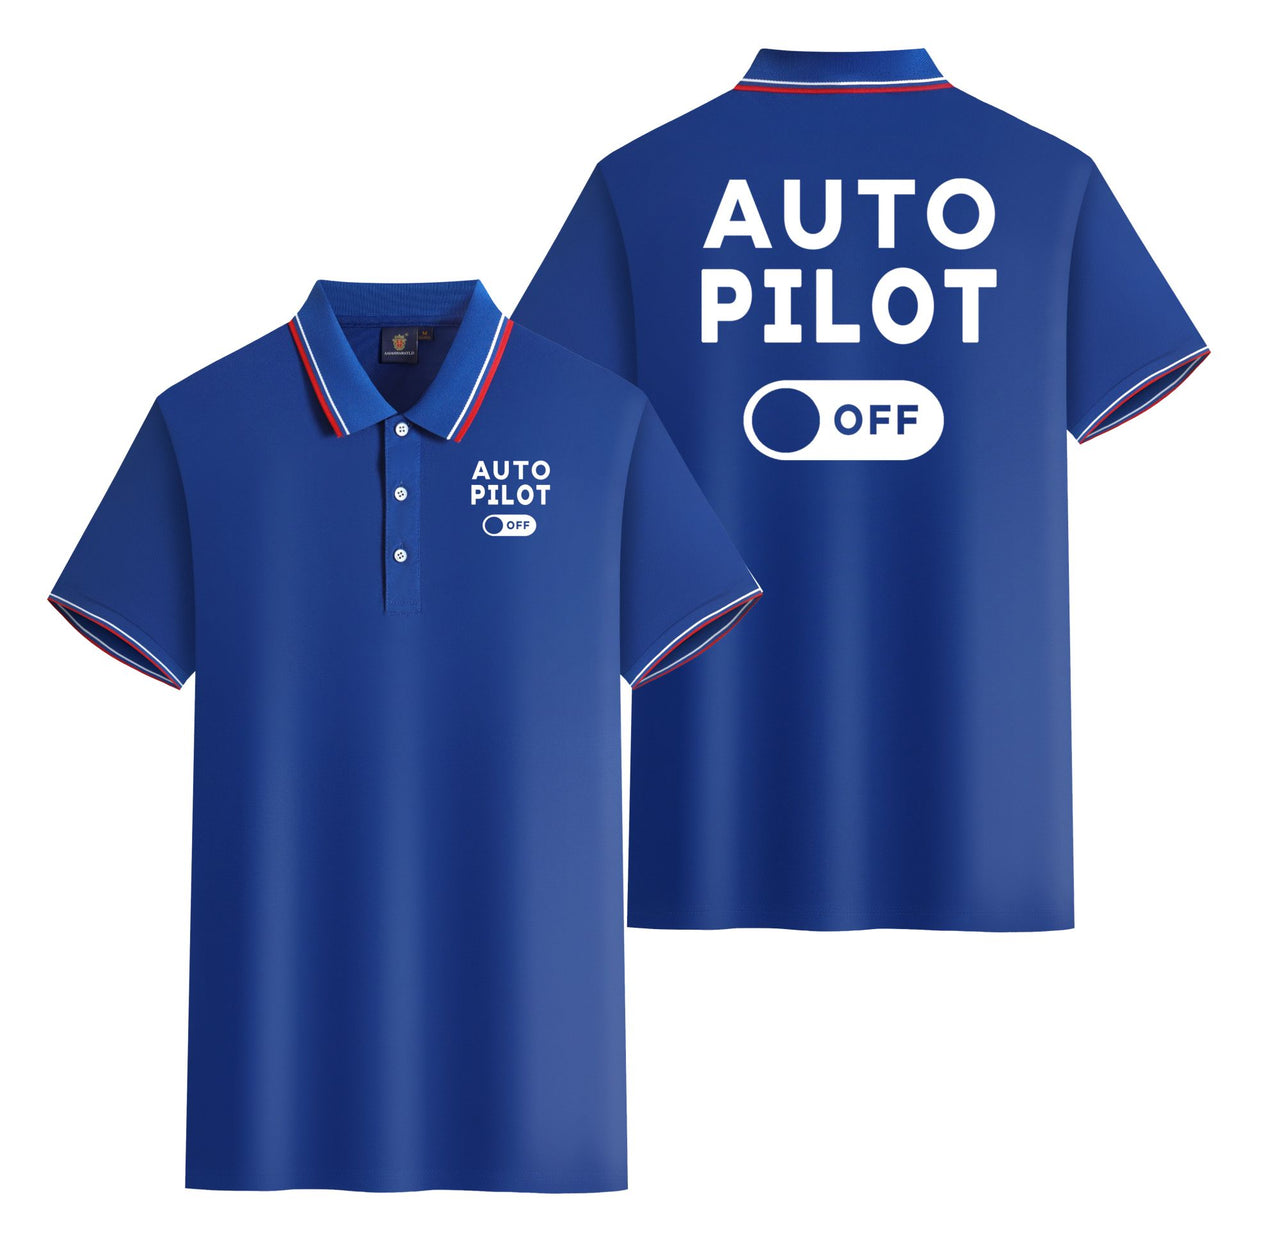 Auto Pilot Off Designed Stylish Polo T-Shirts (Double-Side)